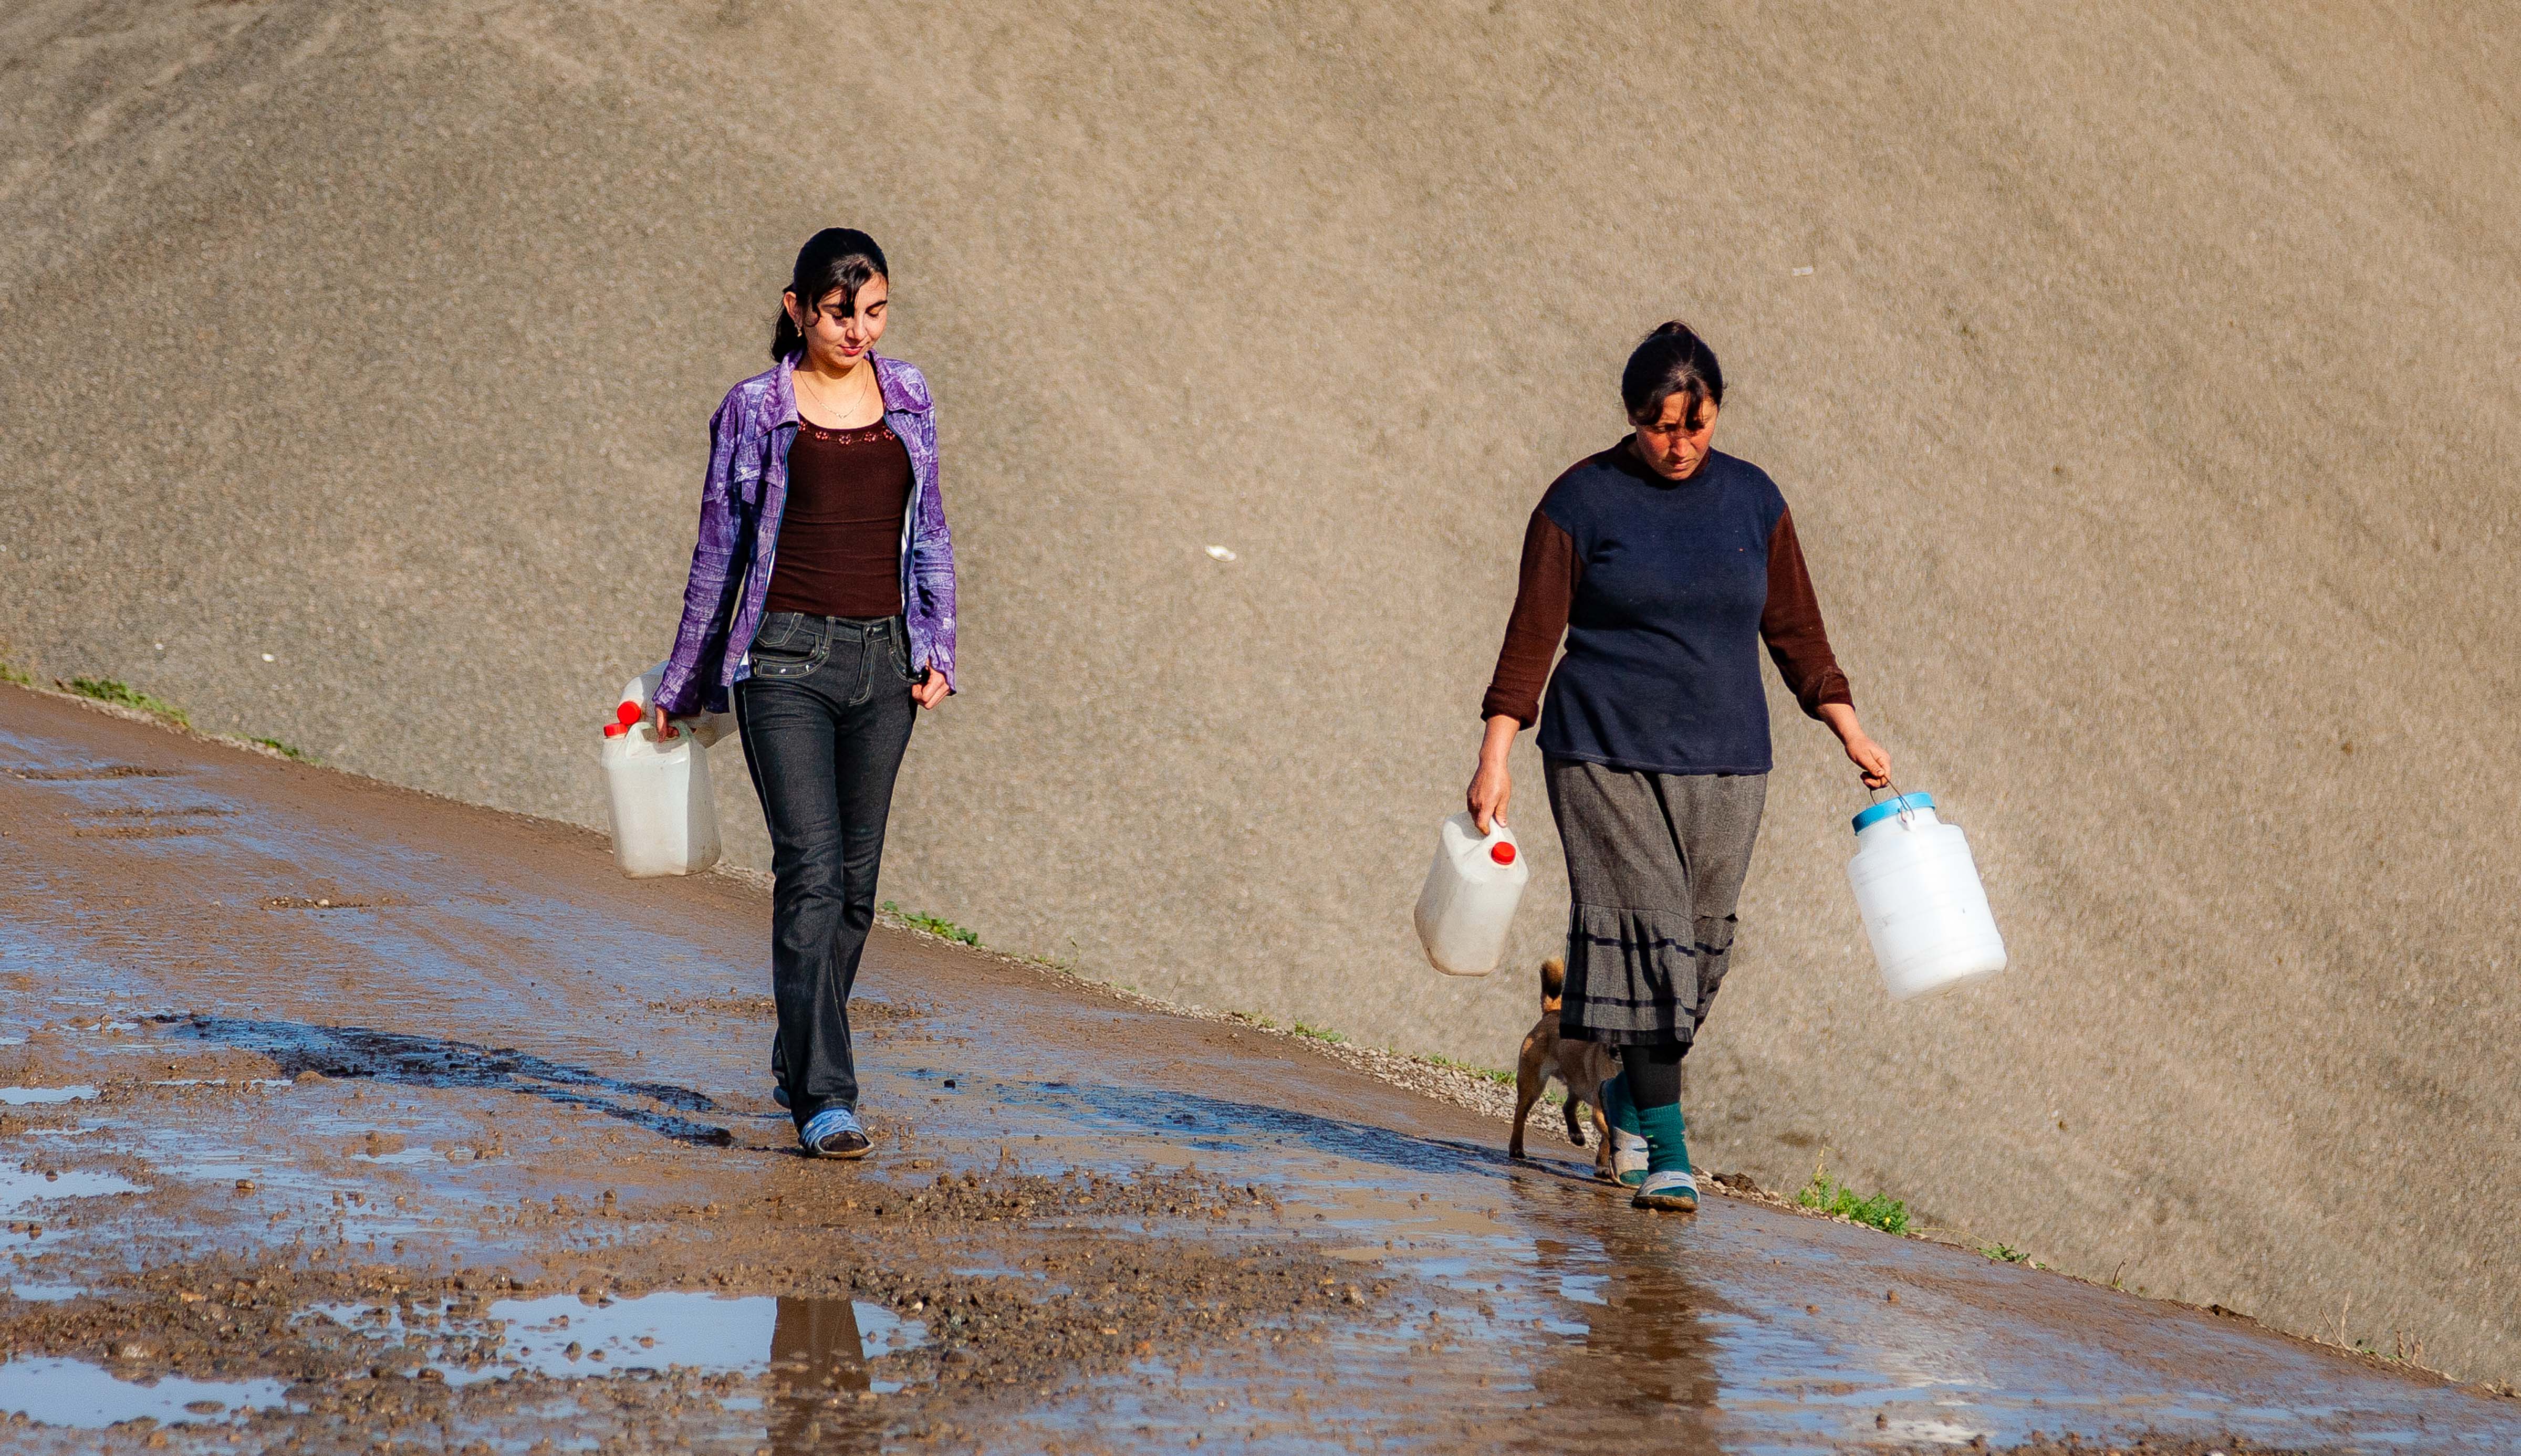 Azerbaijan, Qazax Prov, Getting Water, 2009, IMG 8719